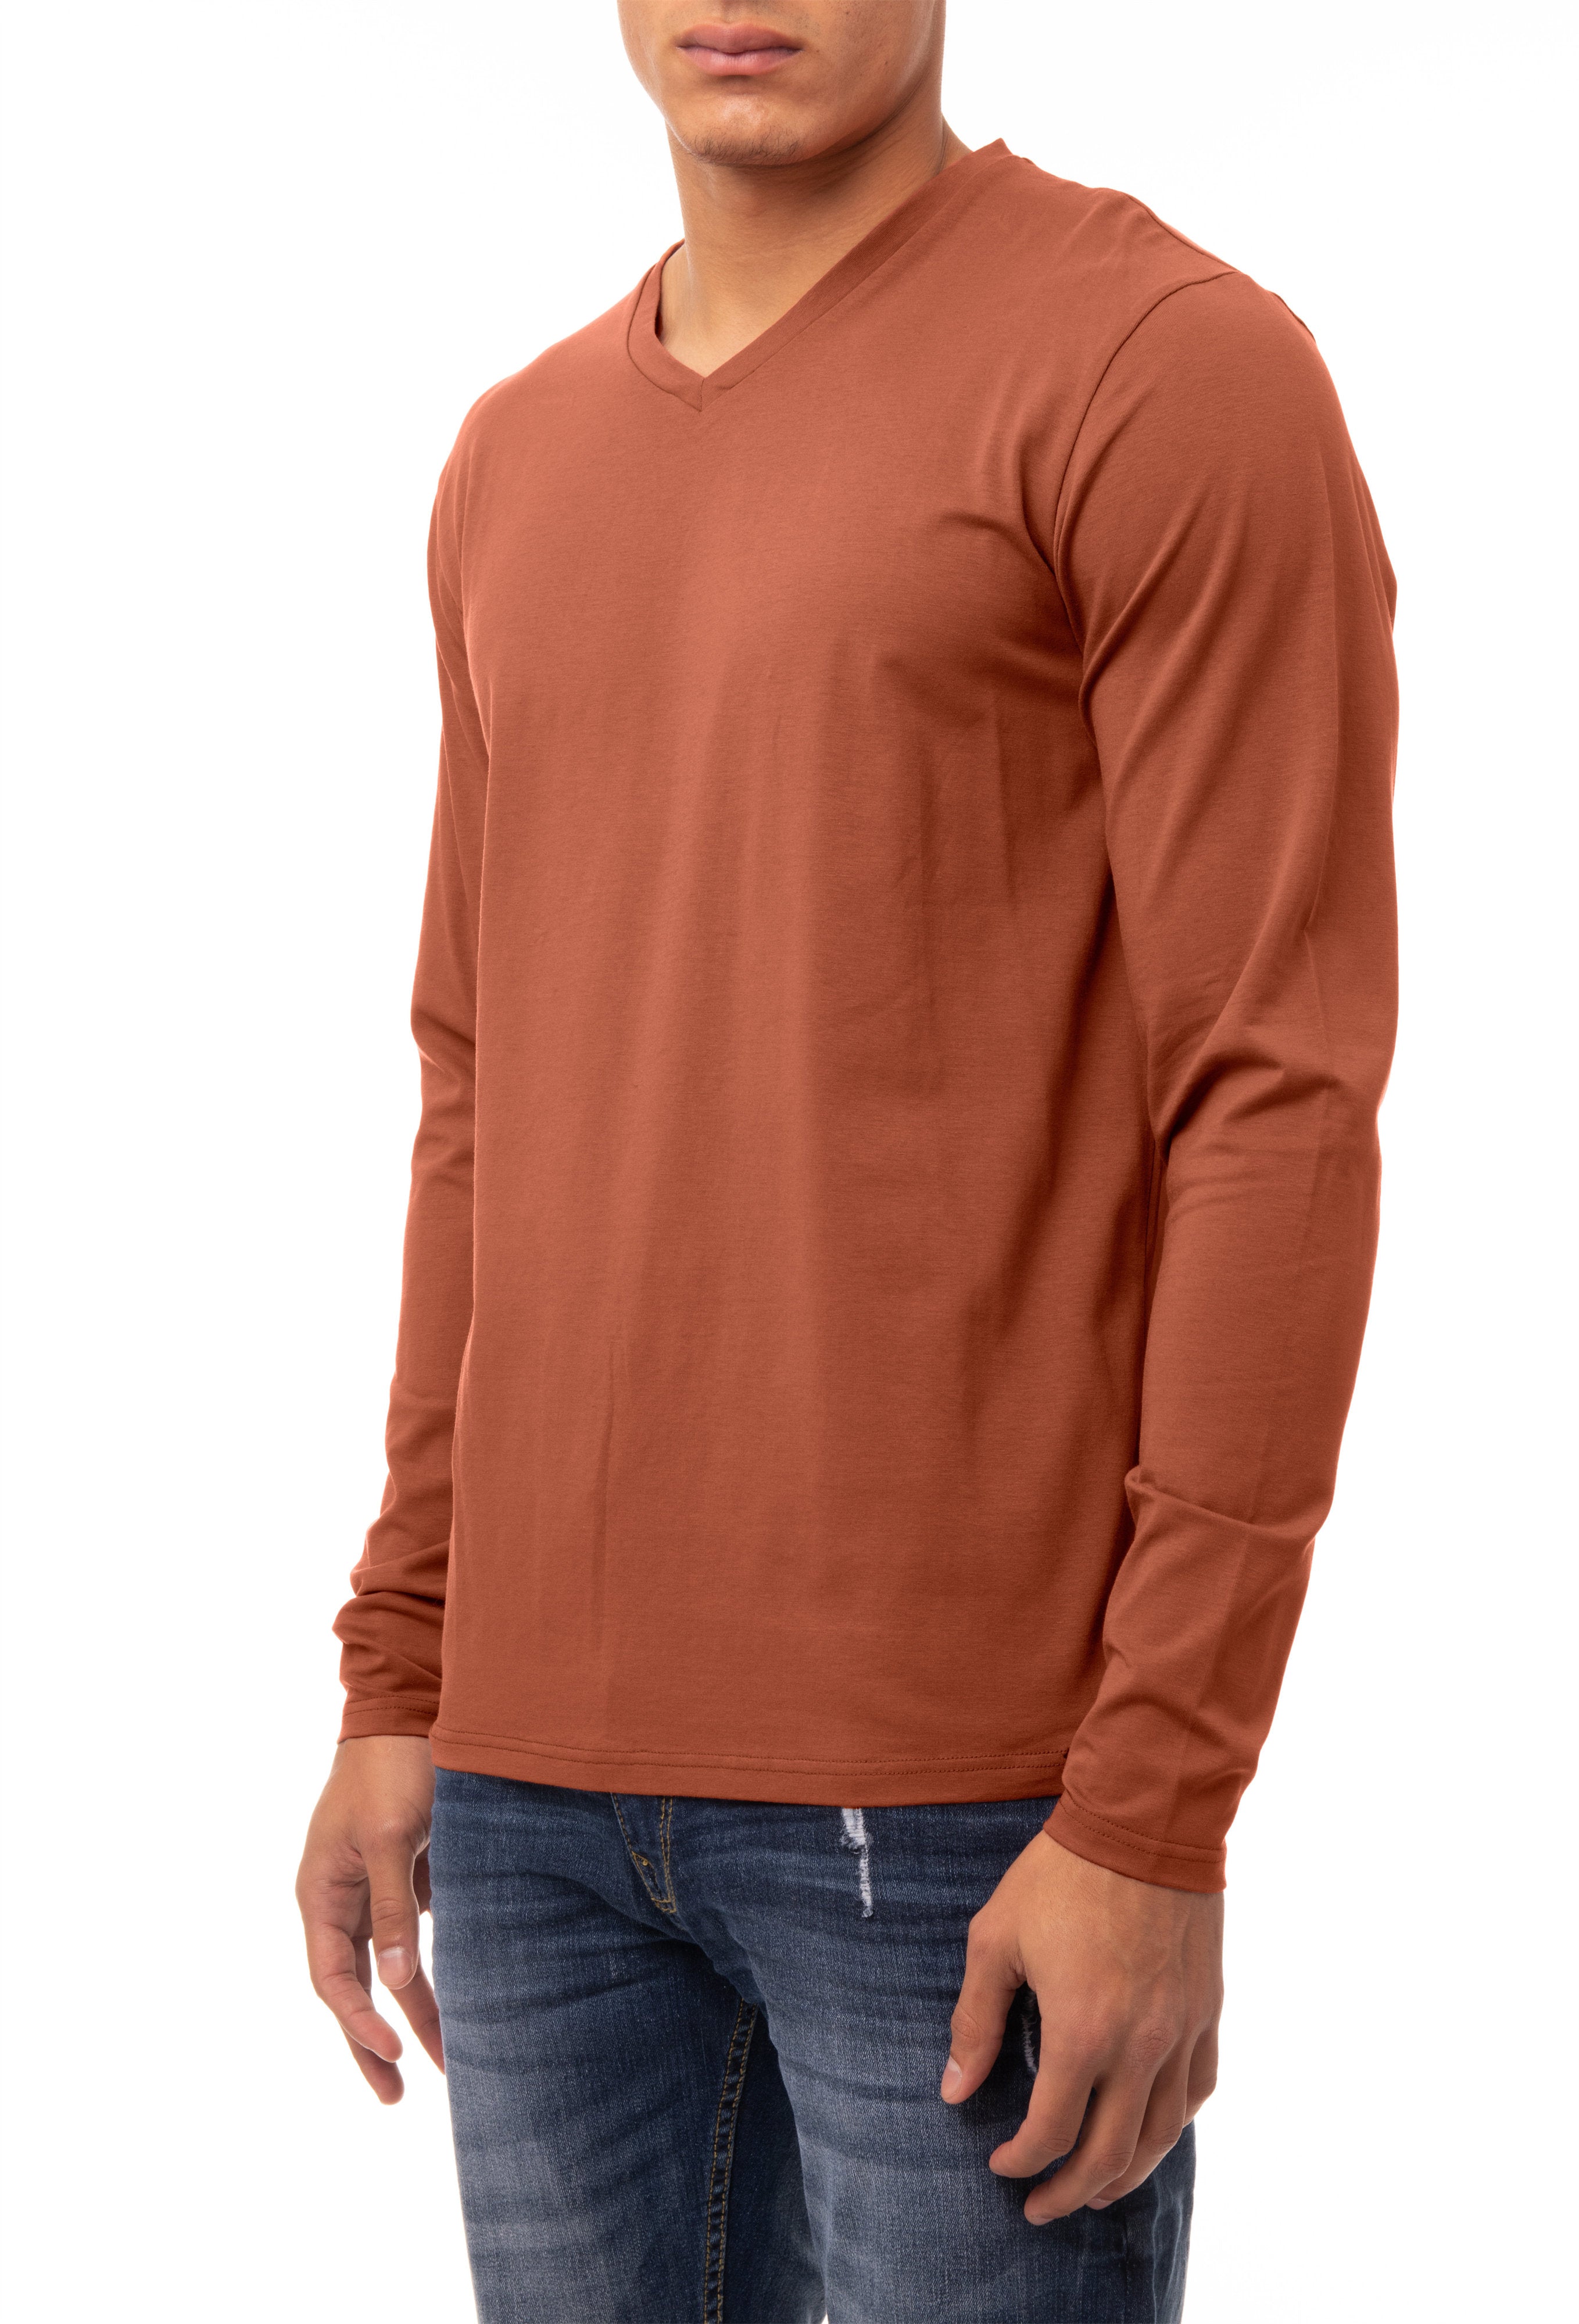 X RAY Men's Classic Long Sleeve V-Neck T-Shirt – X-RAY JEANS